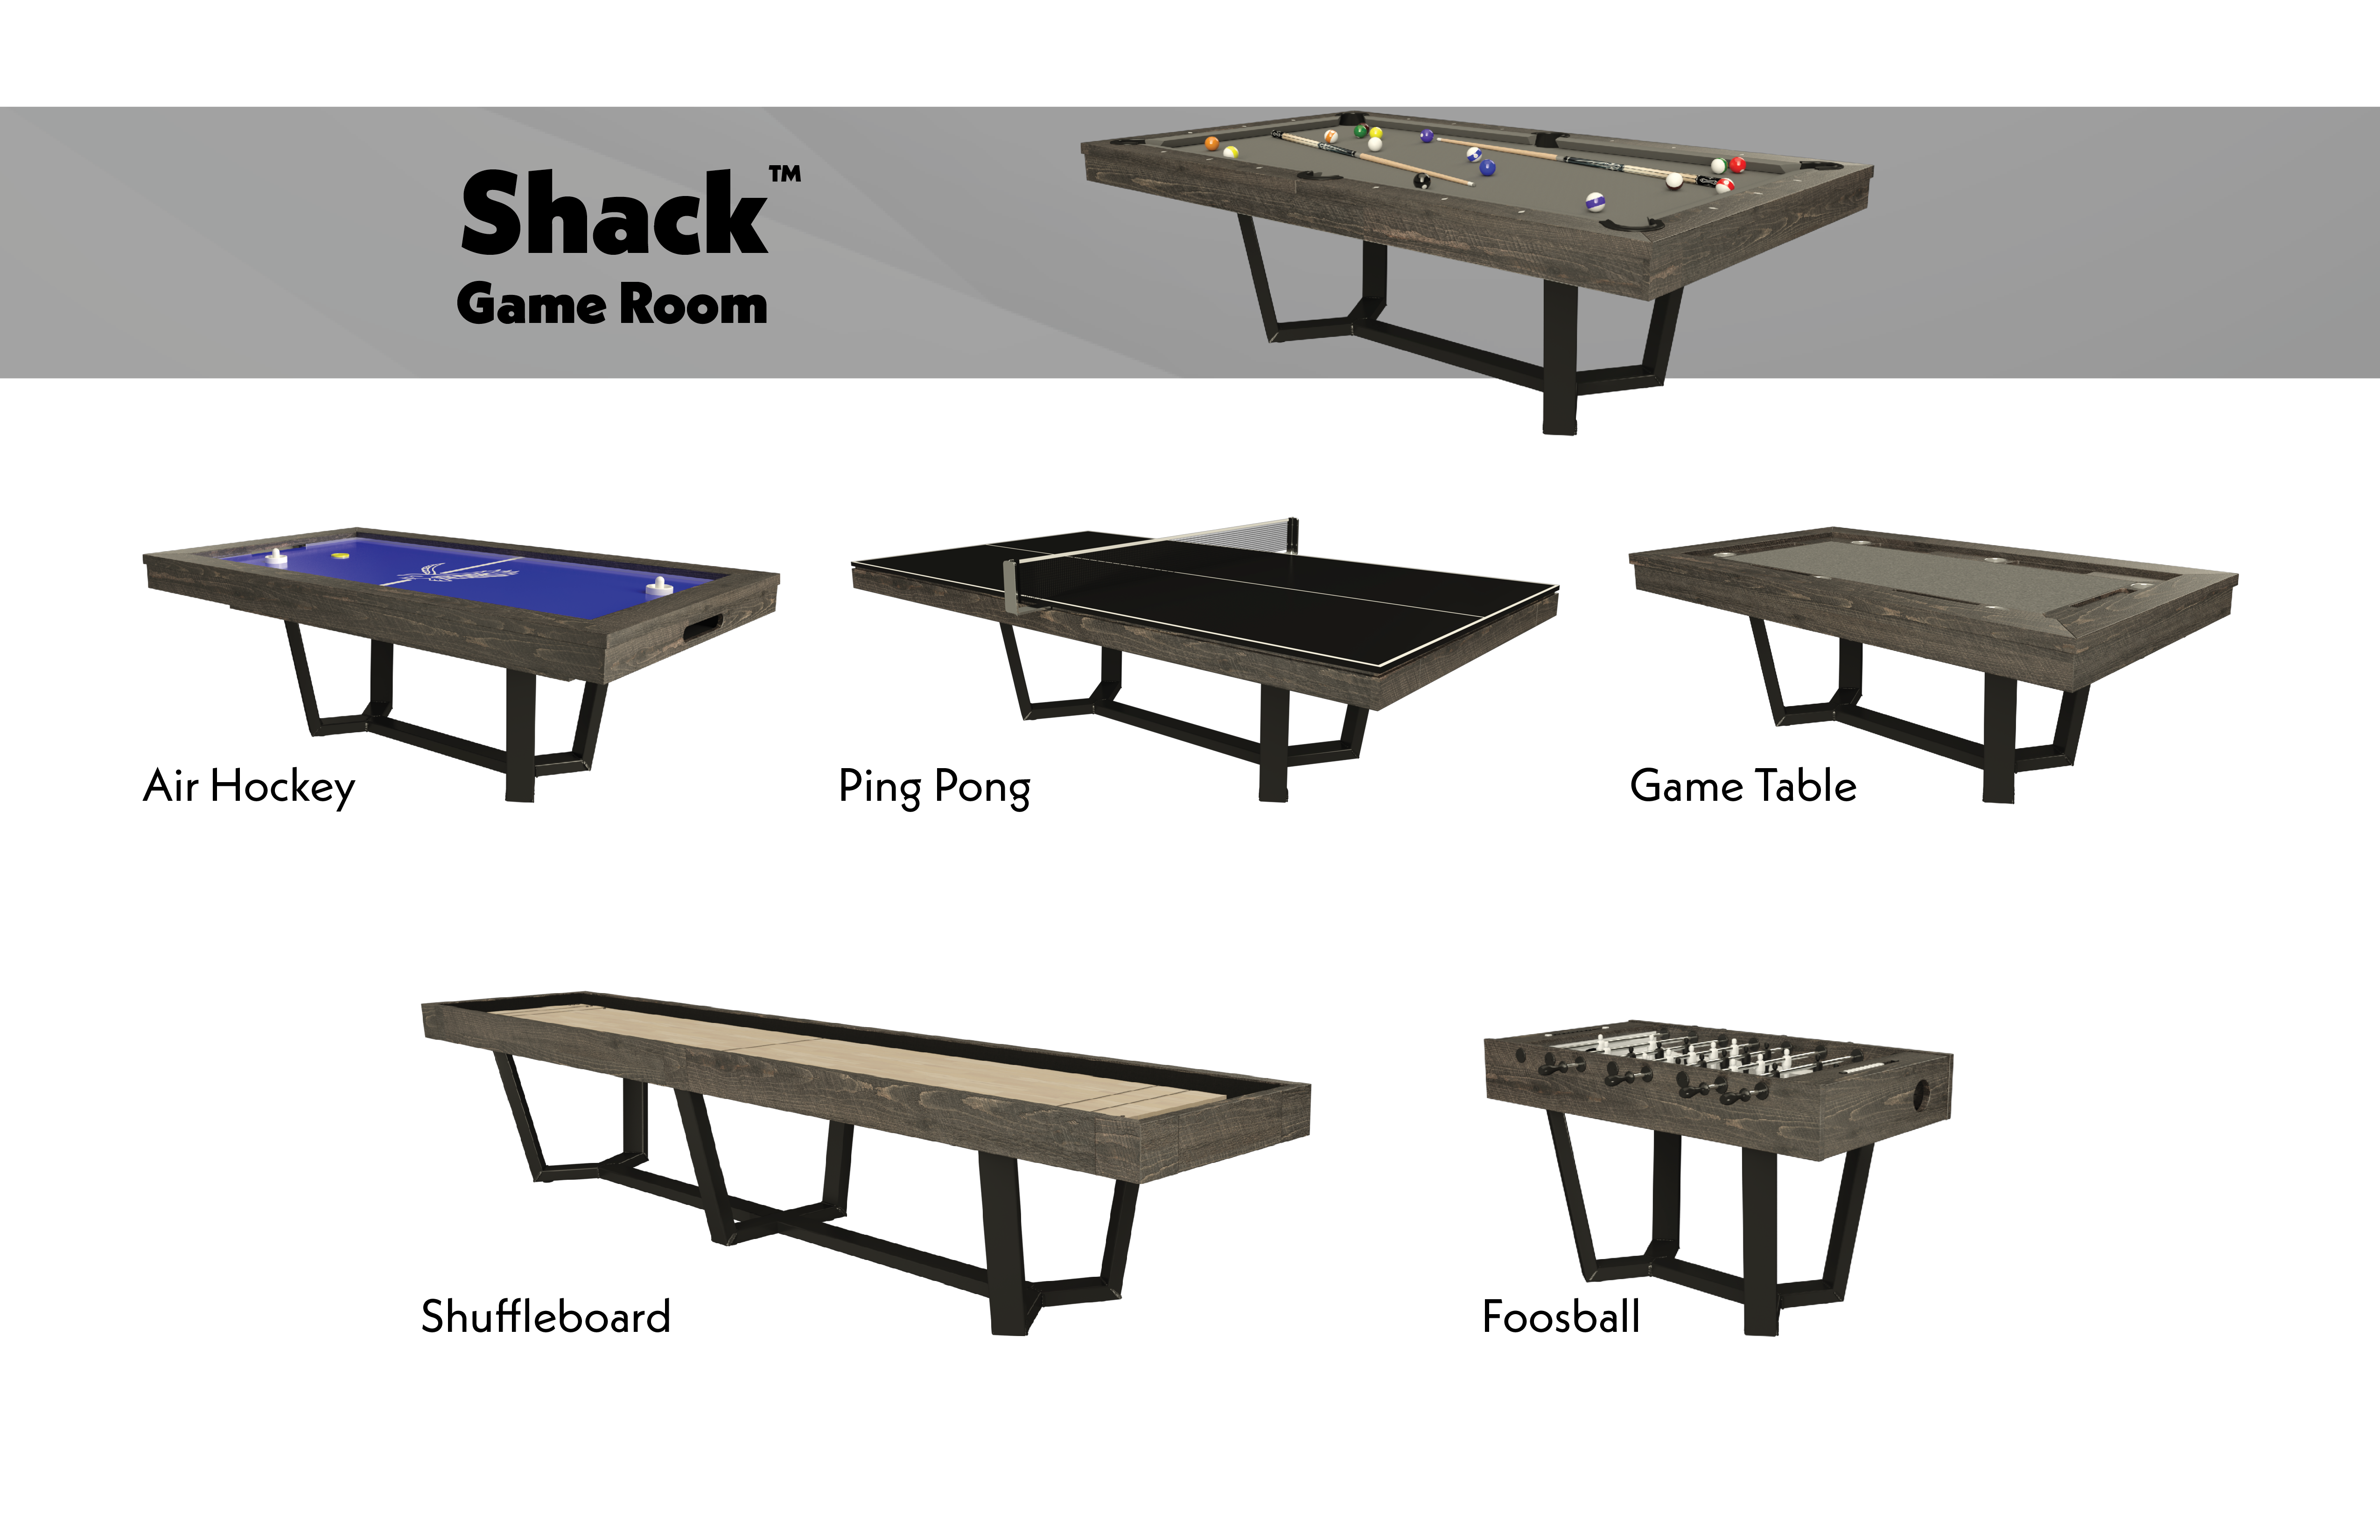 SHACK GAME ROOM